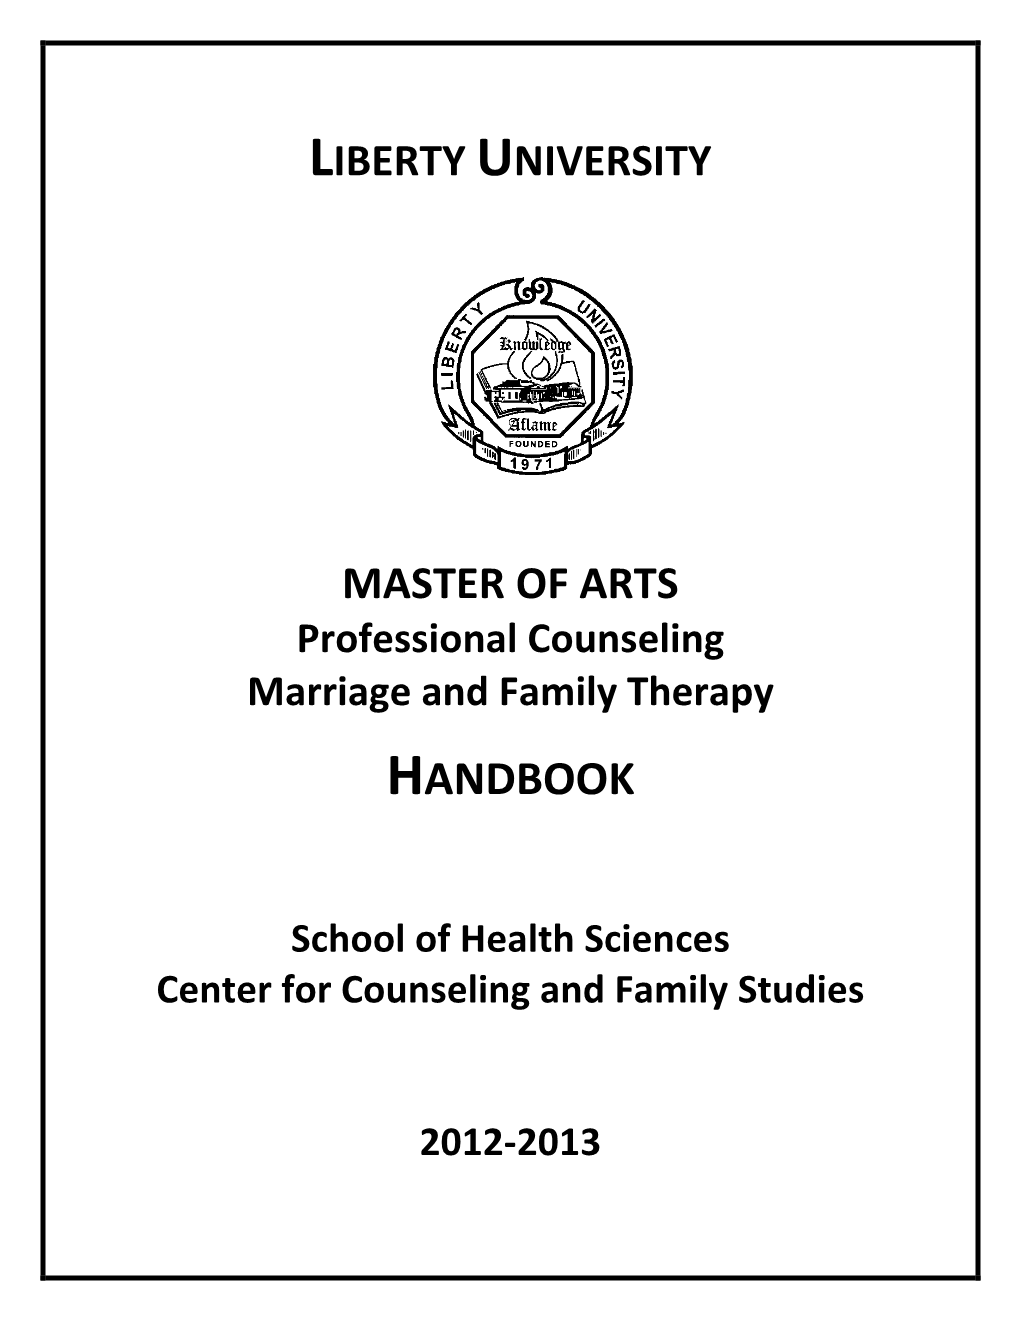 The Graduate Counseling Program